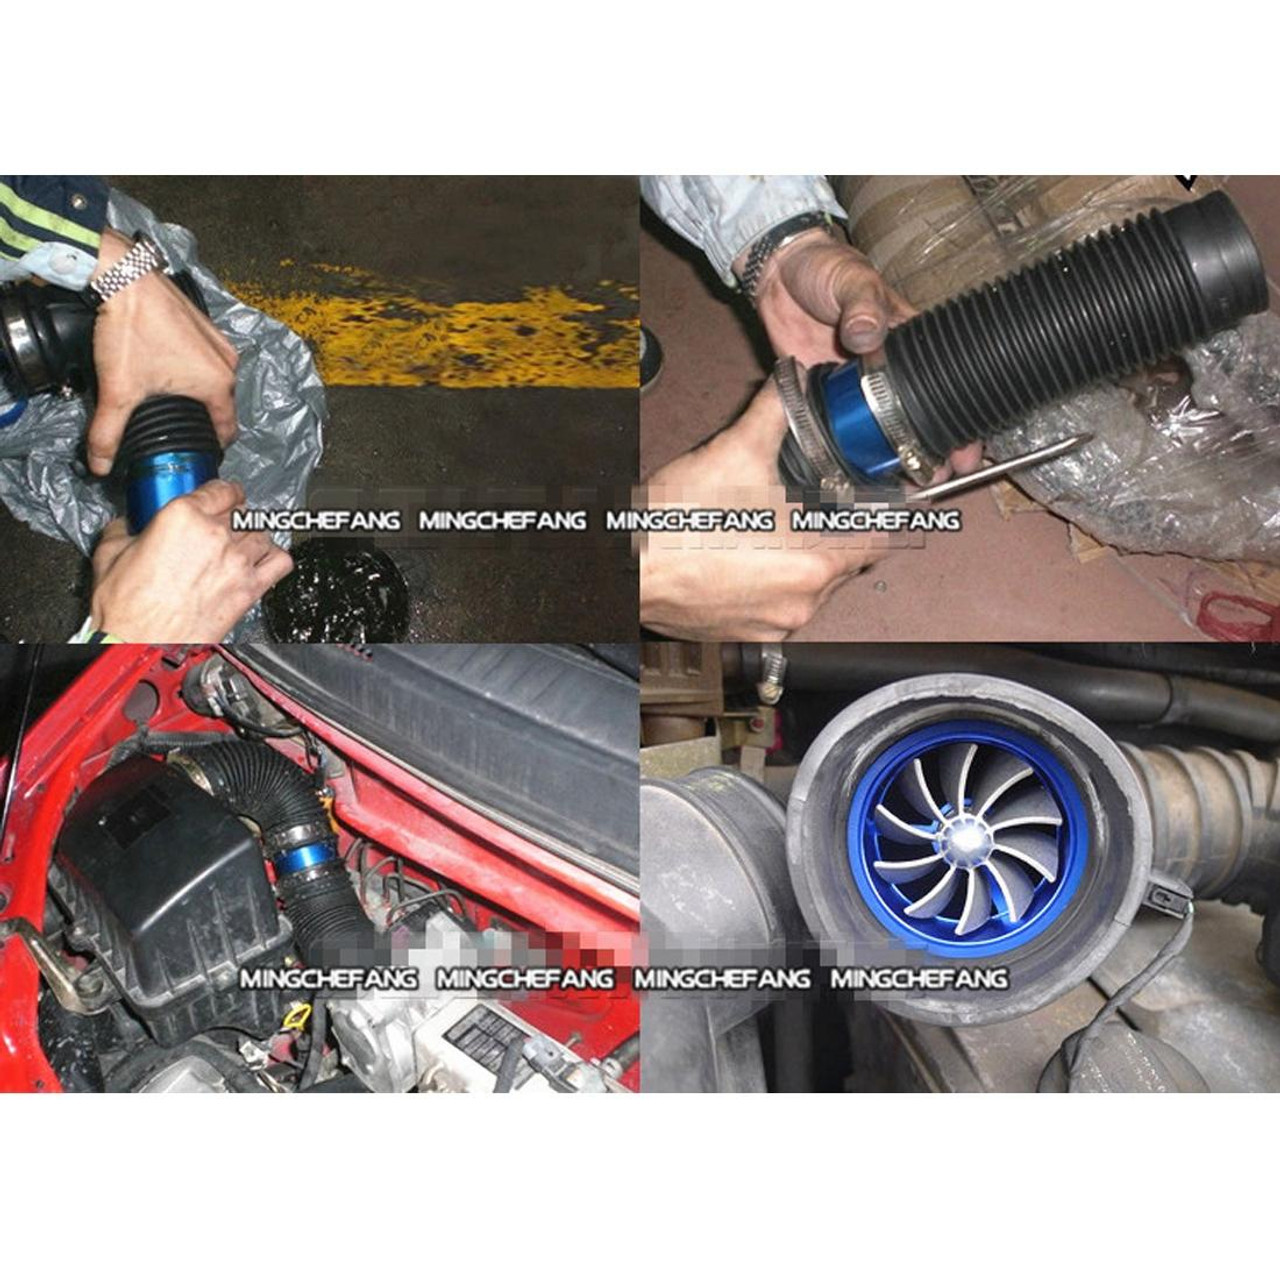 F1-Z Turbo Air Intake Fan Supercharger Car Dual Double Side Fuel Gas Saver  Propeller Turbonator Ventilator TUR007